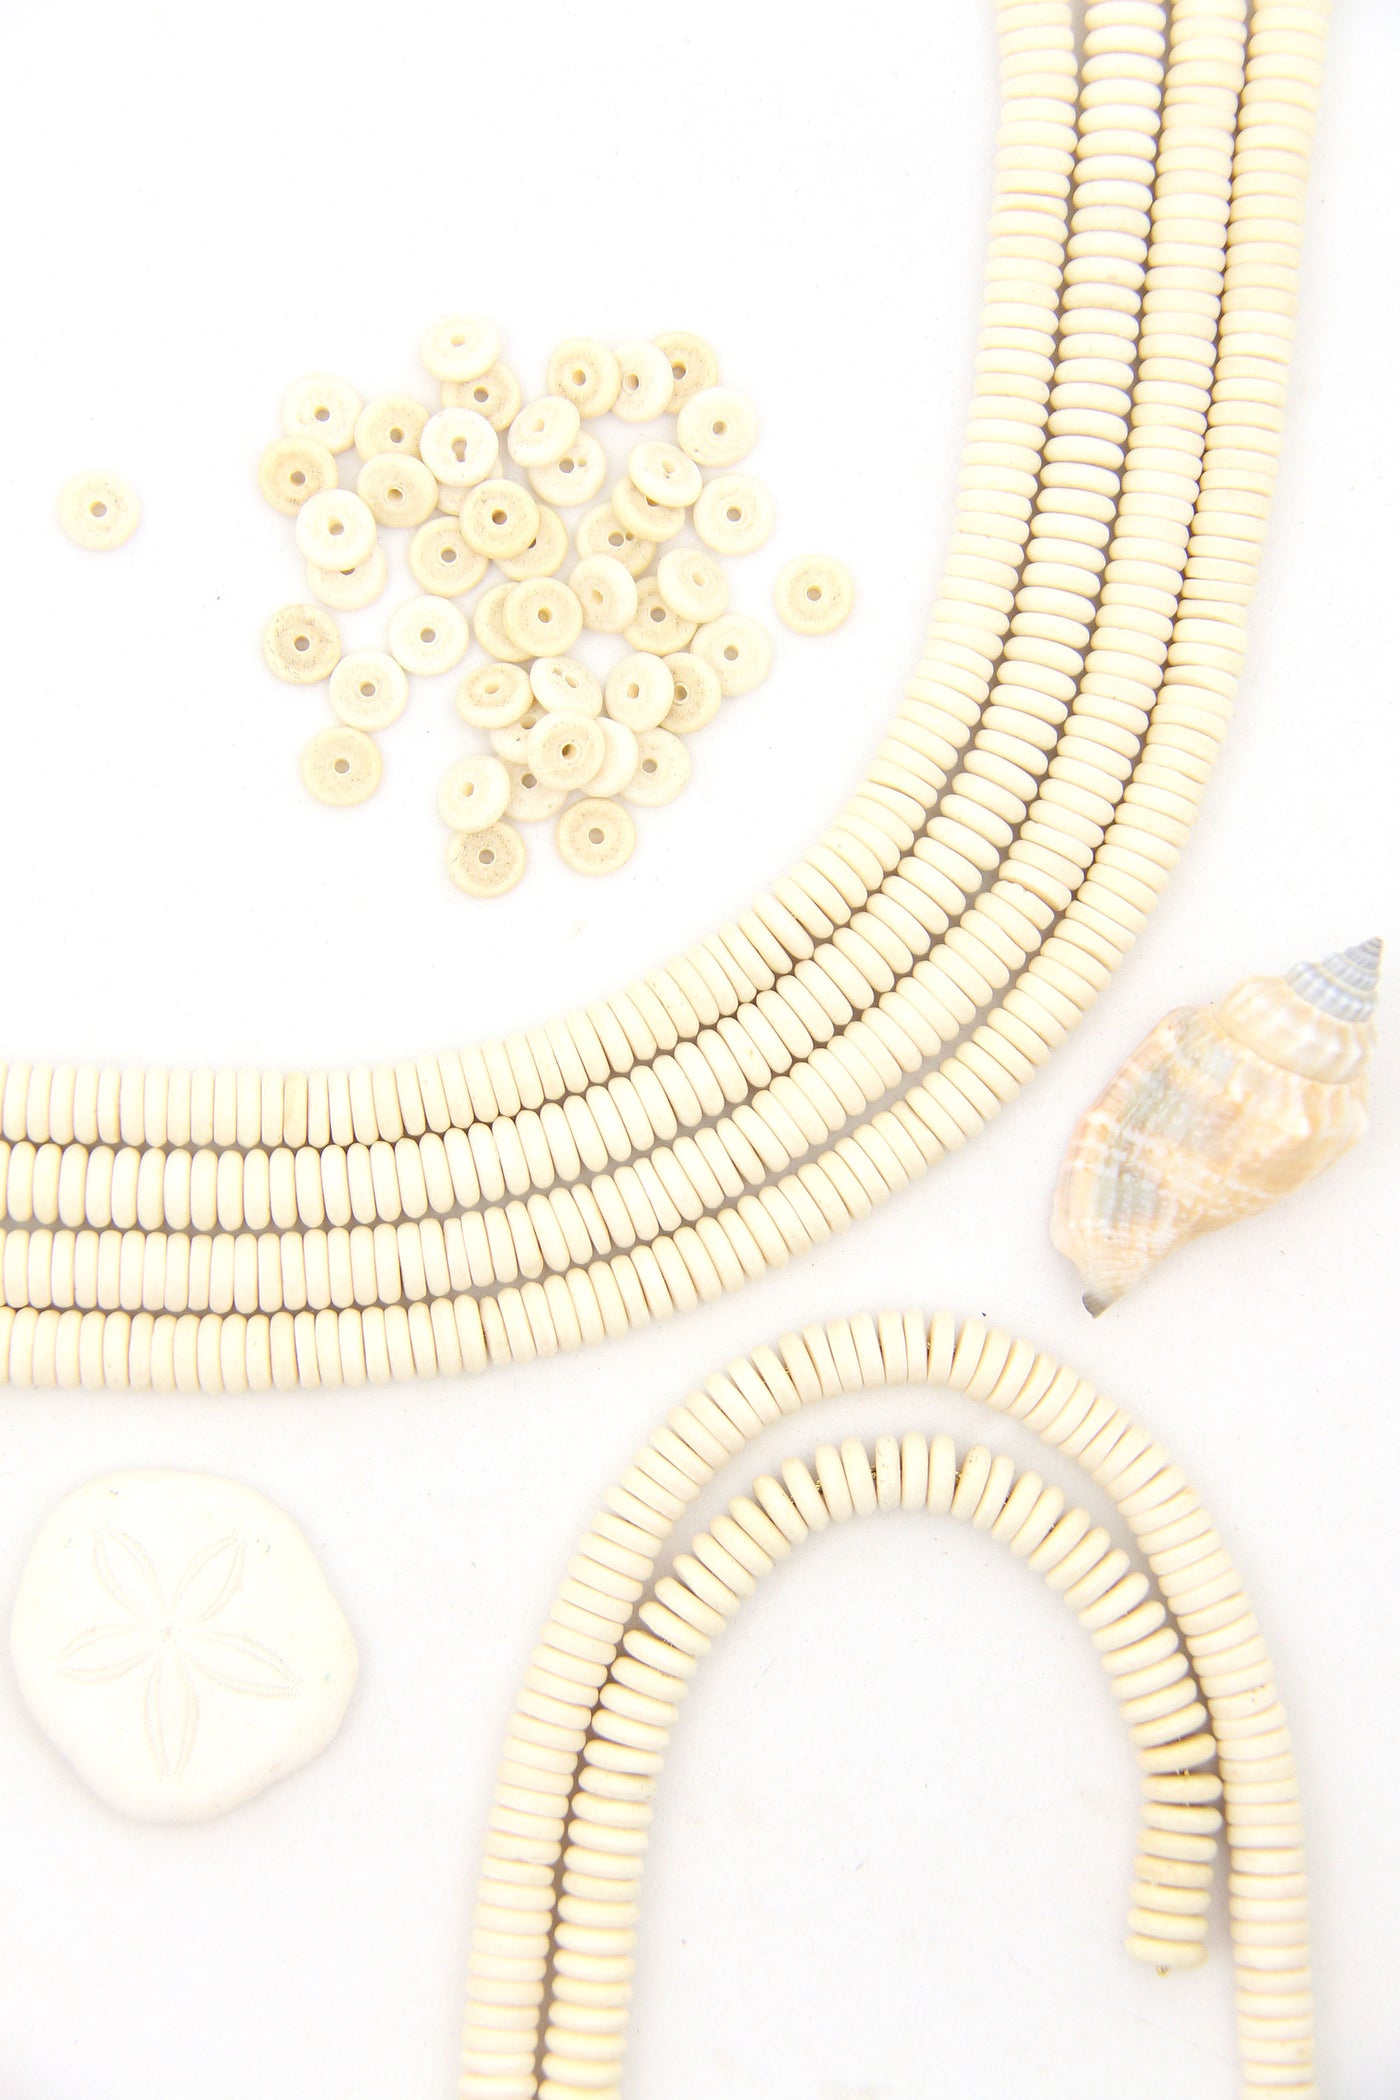 Cream Bone Beads: Neutral Off-White Rondelle Spacer Discs, 7x2mm